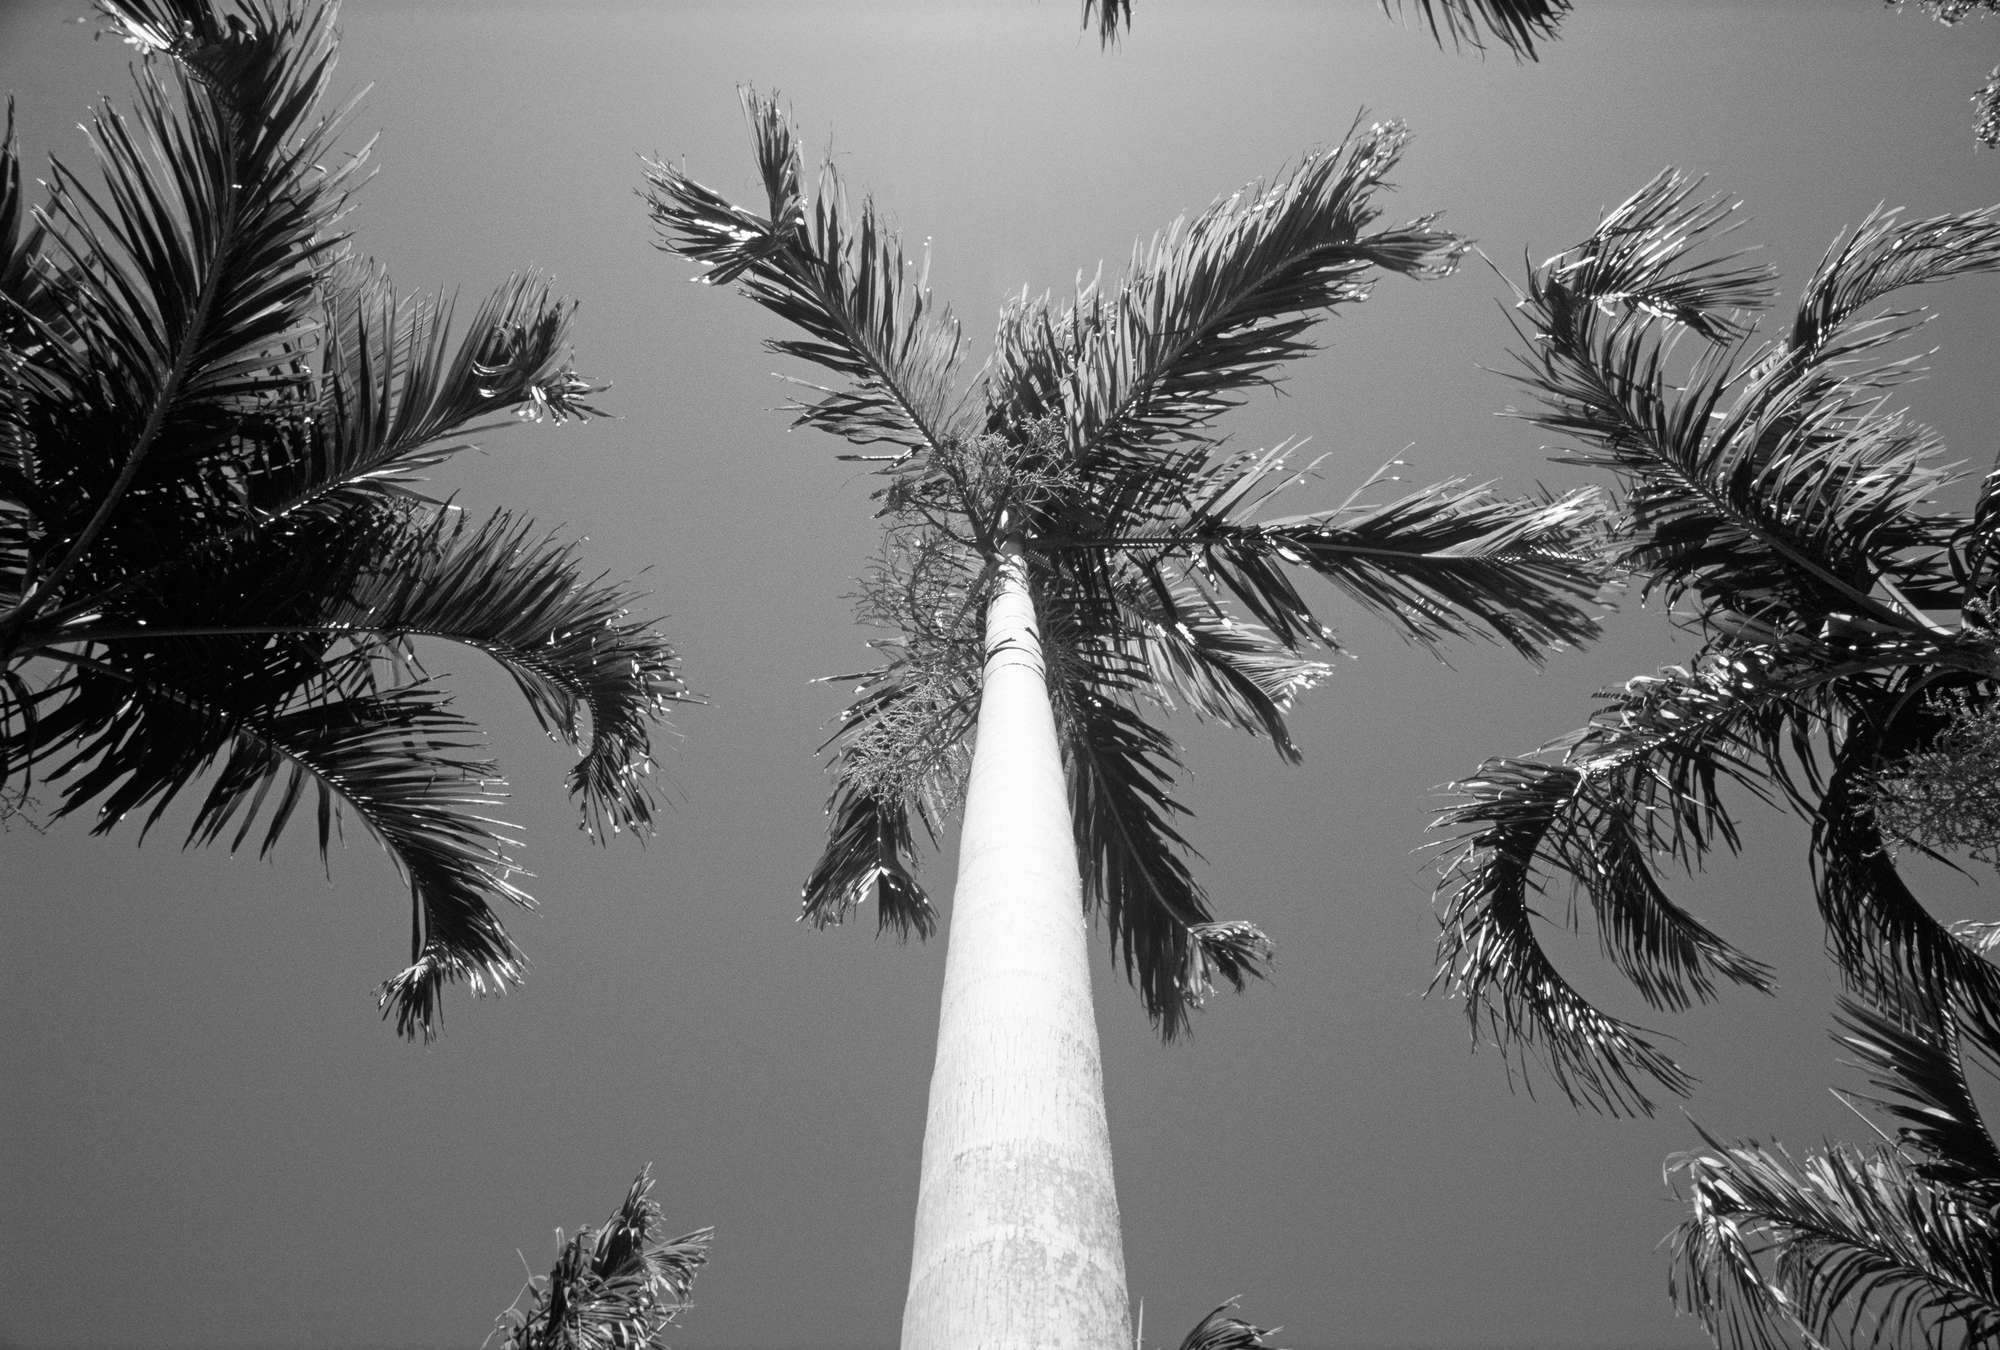             Palmen - Zwart-wit muurschildering met palmbomen
        